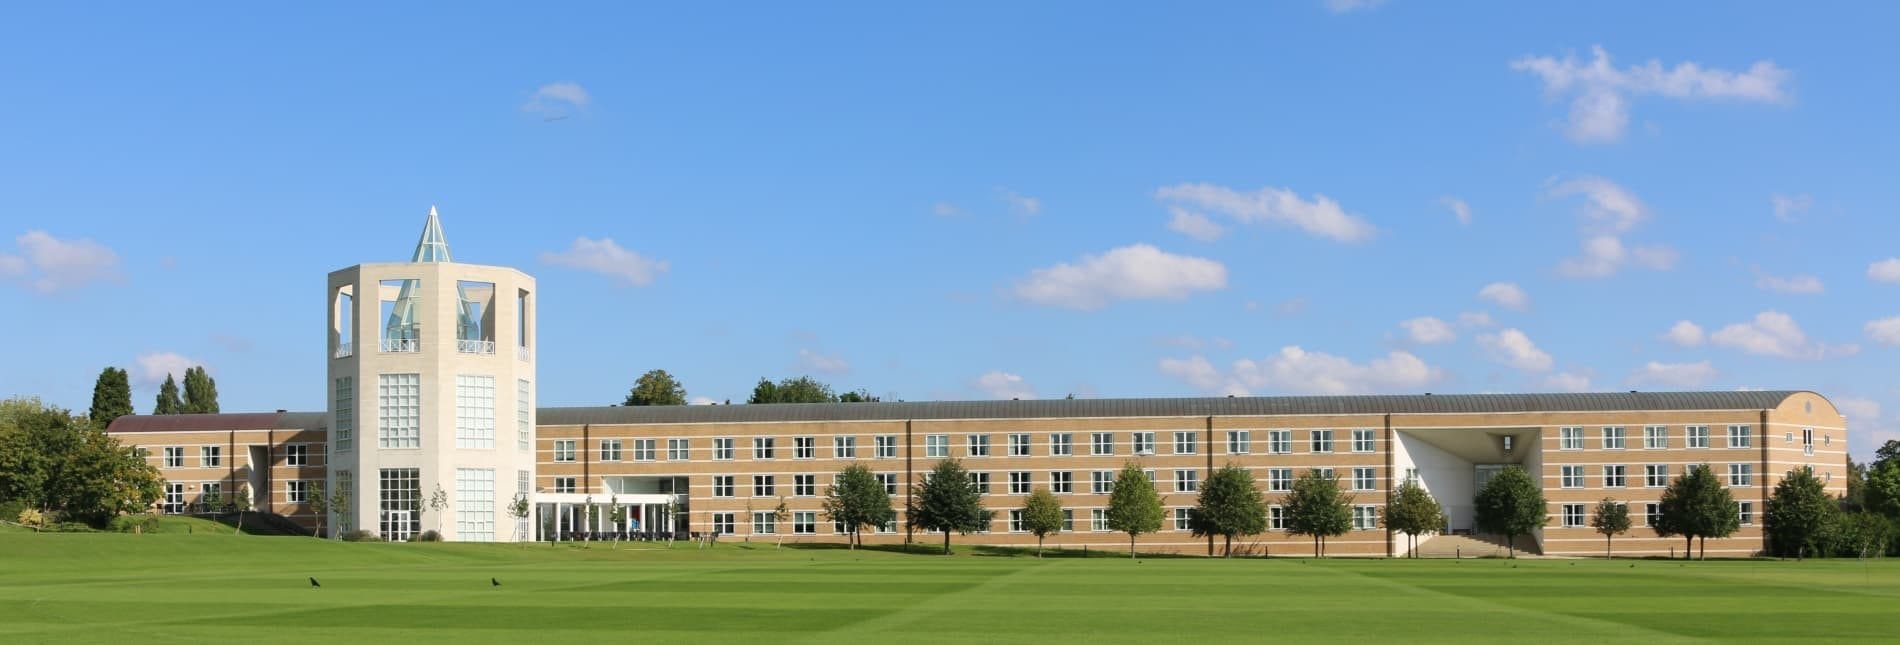 Moller Institute - Danish-designed, residential leadership development & executive education venue